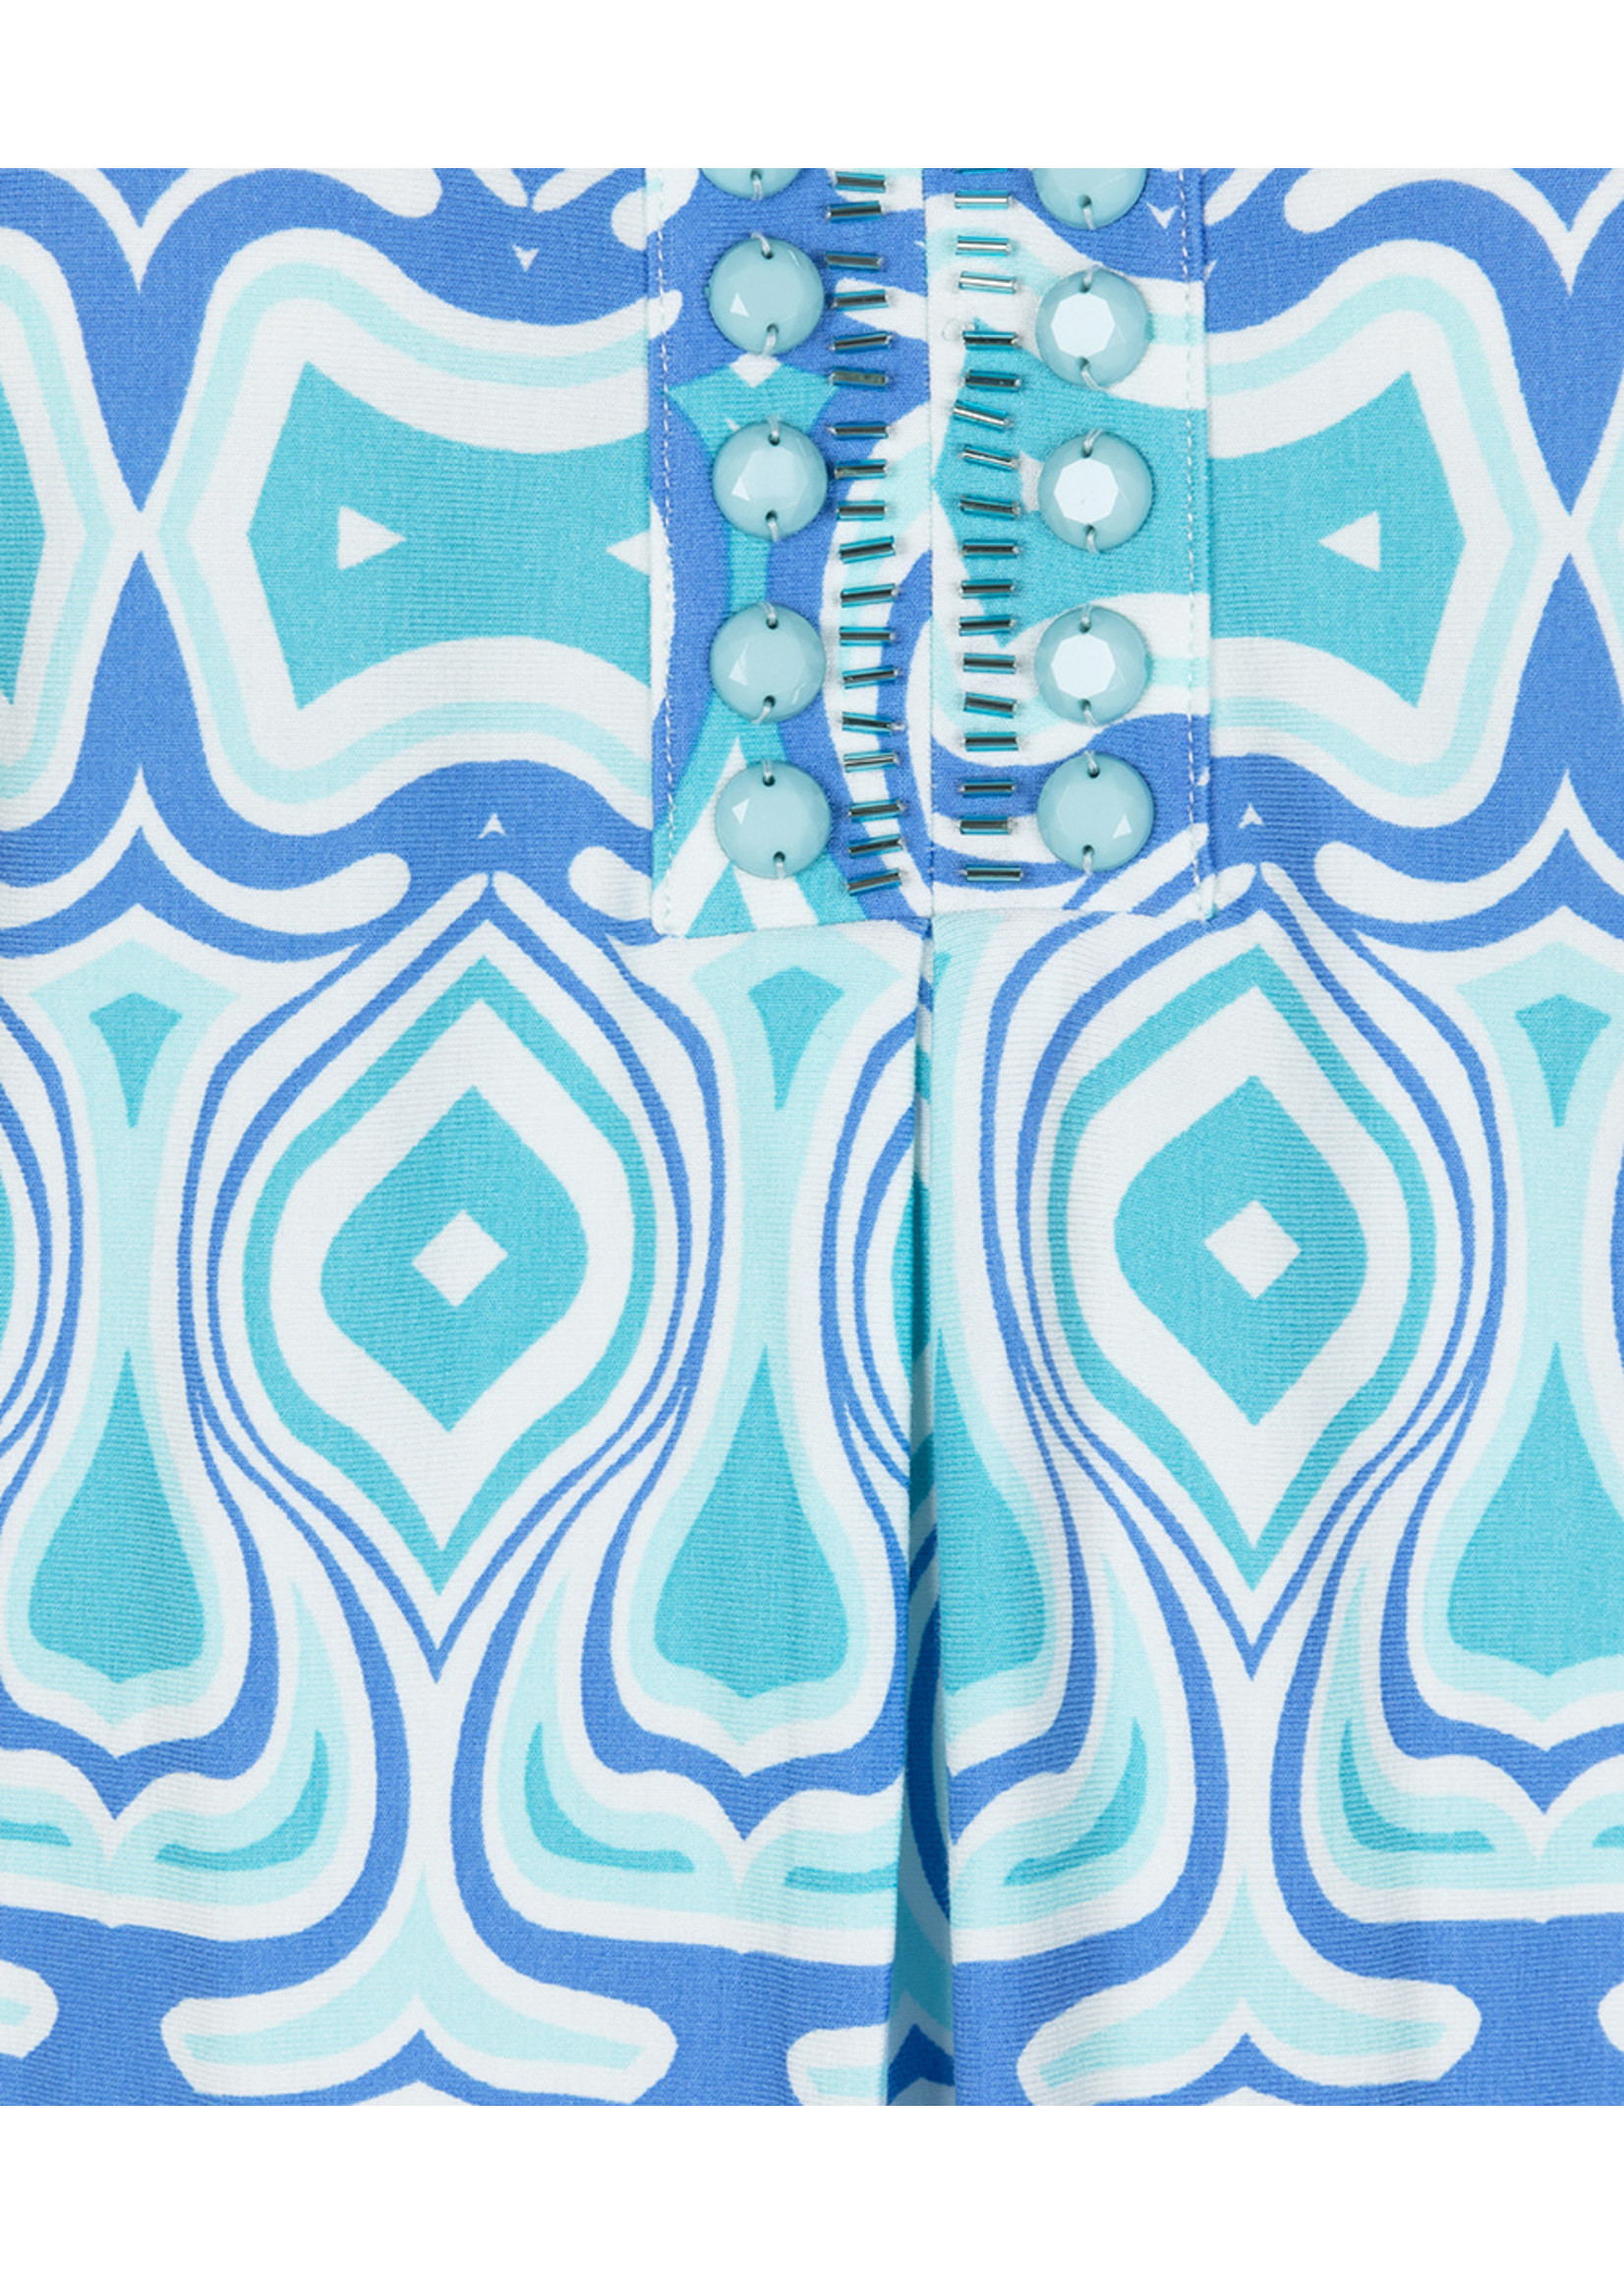 Esqualo Dress beads graphic blues	Print